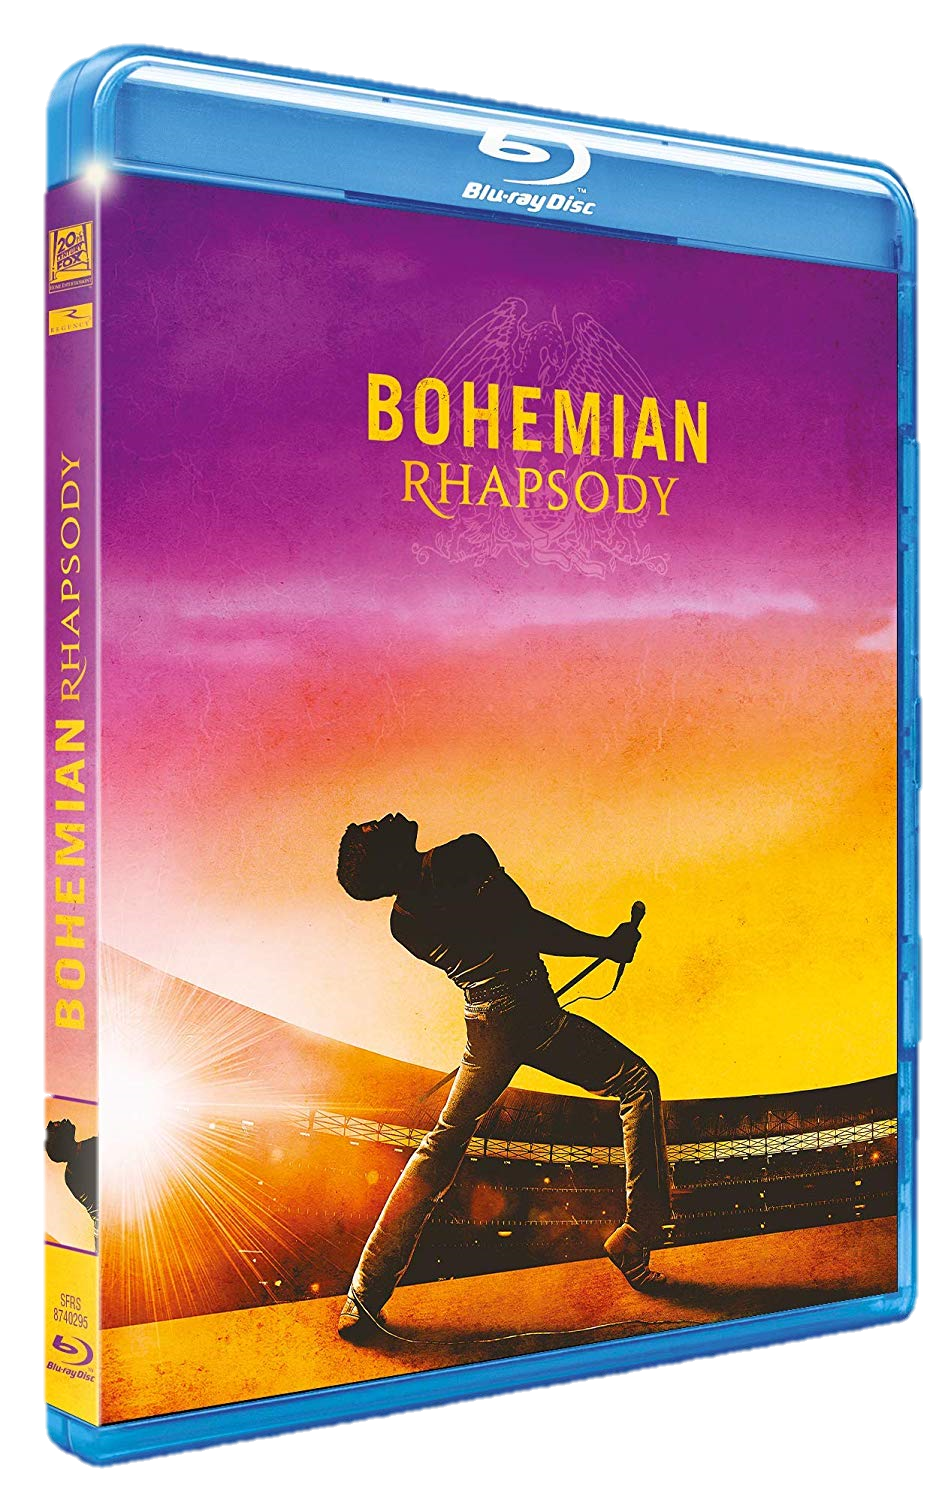 flashvideofilm - Bohemian Rhapsody [Blu-Ray] - Location